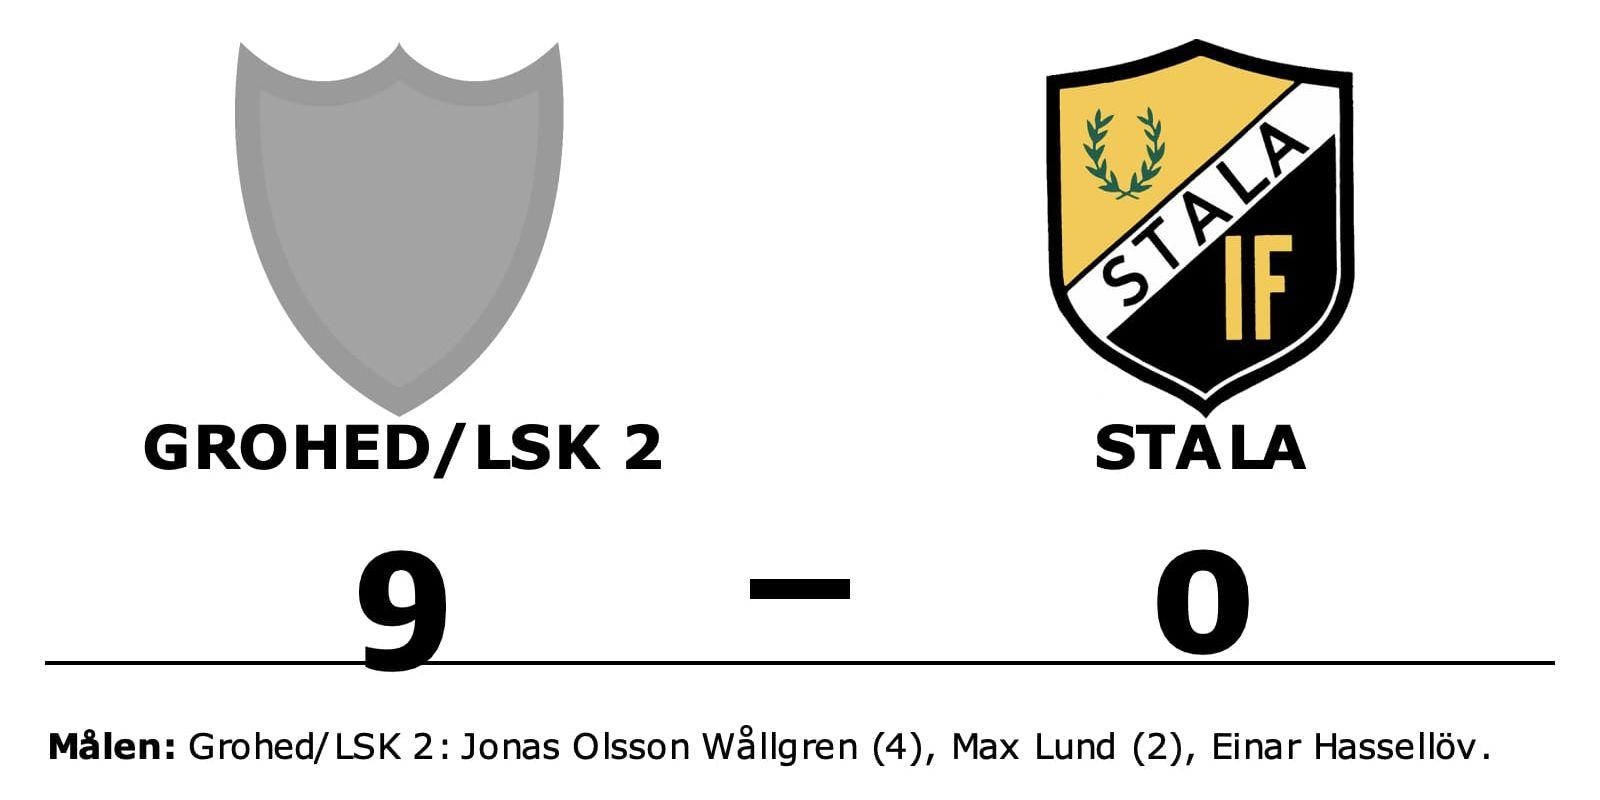 Grohed/LSK 2 vann mot Stala